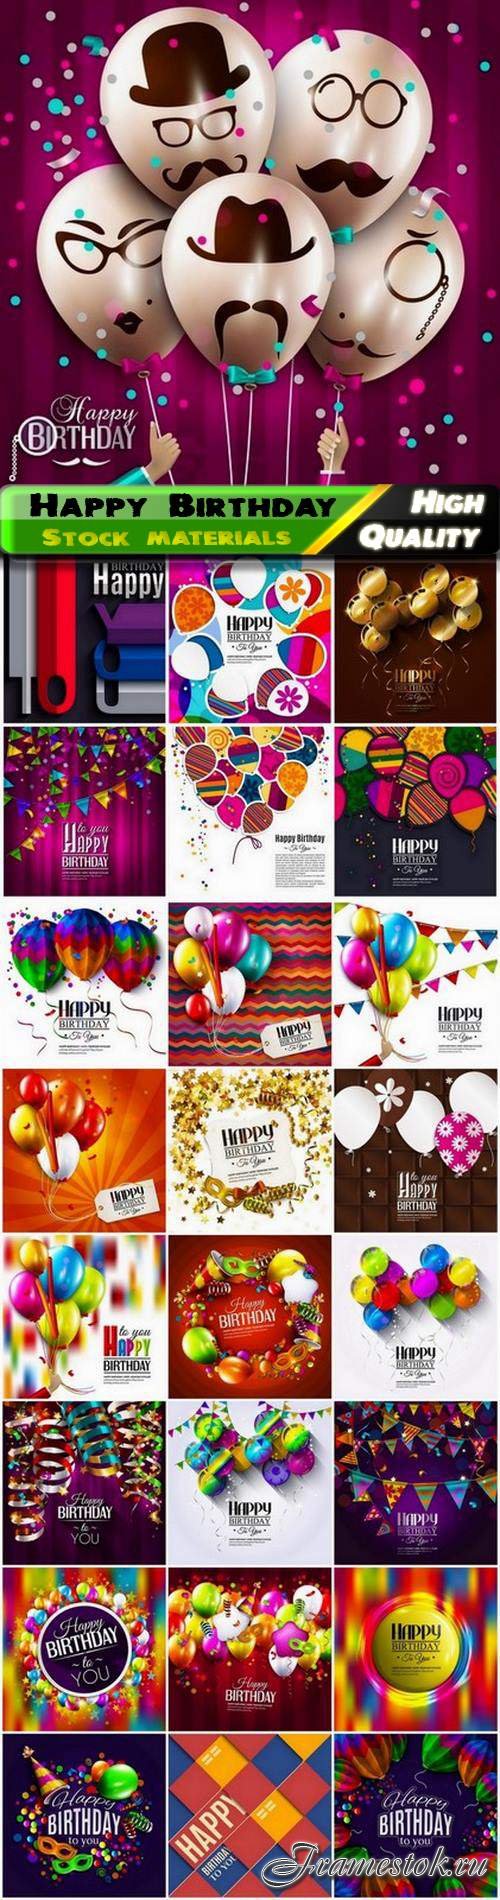 Happy Birthday holiday card with balloon flag confetti - 25 Eps